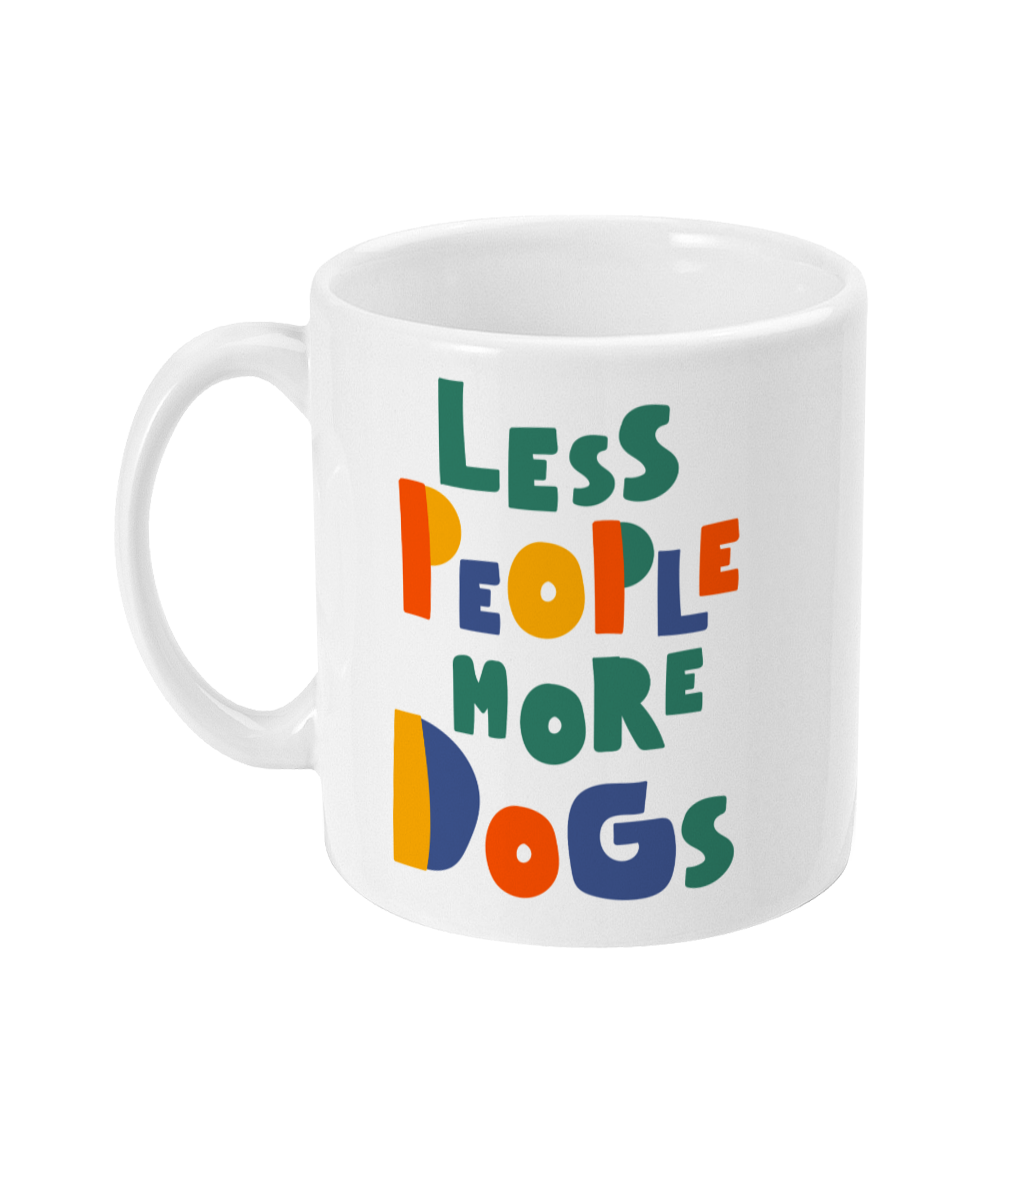 Less People More Dogs | Ceramic Mug